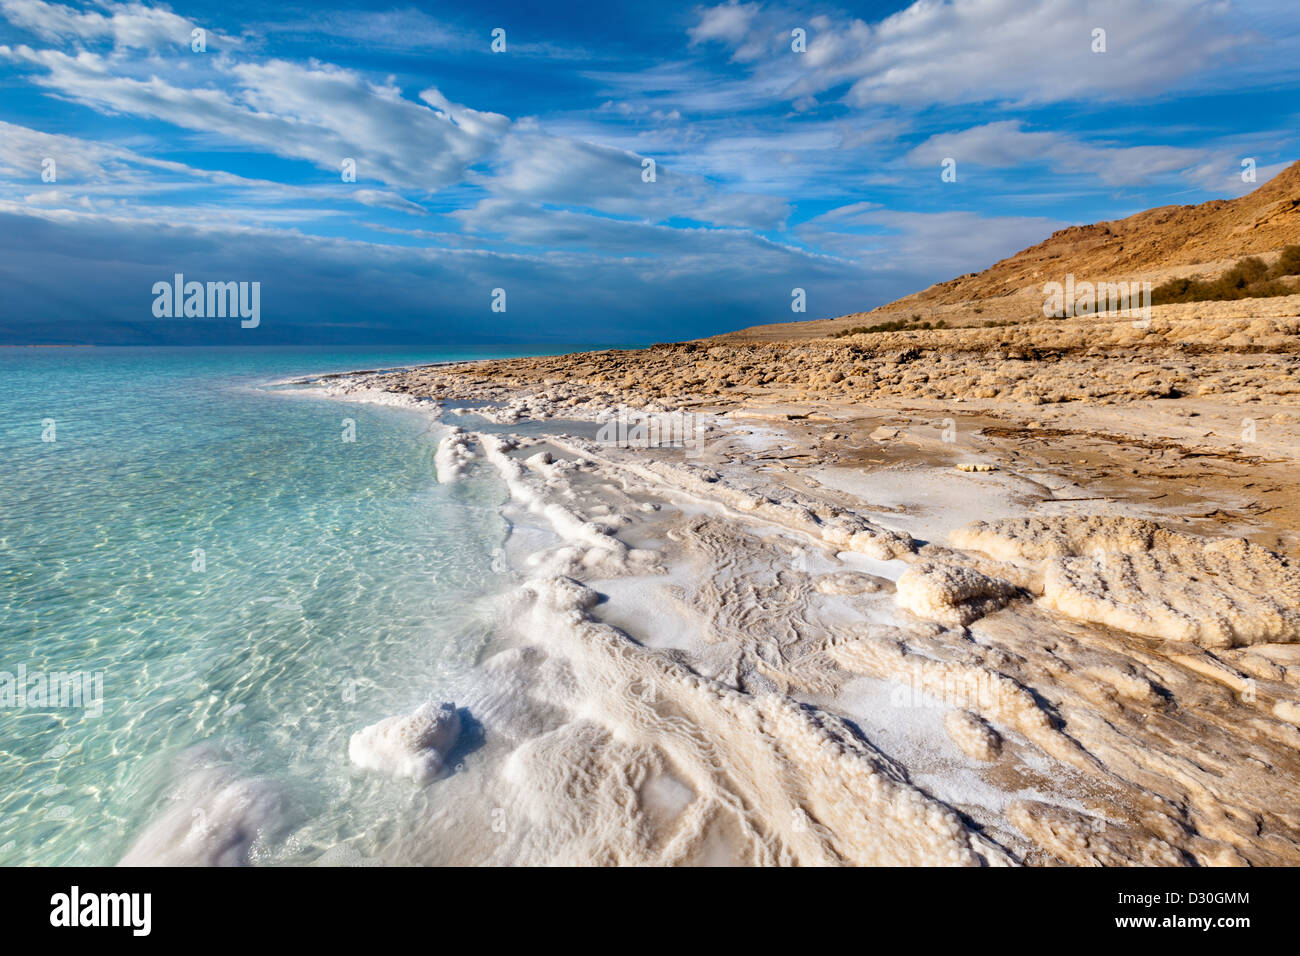 View of the Dead Sea coastline on a sunny day Stock Photo